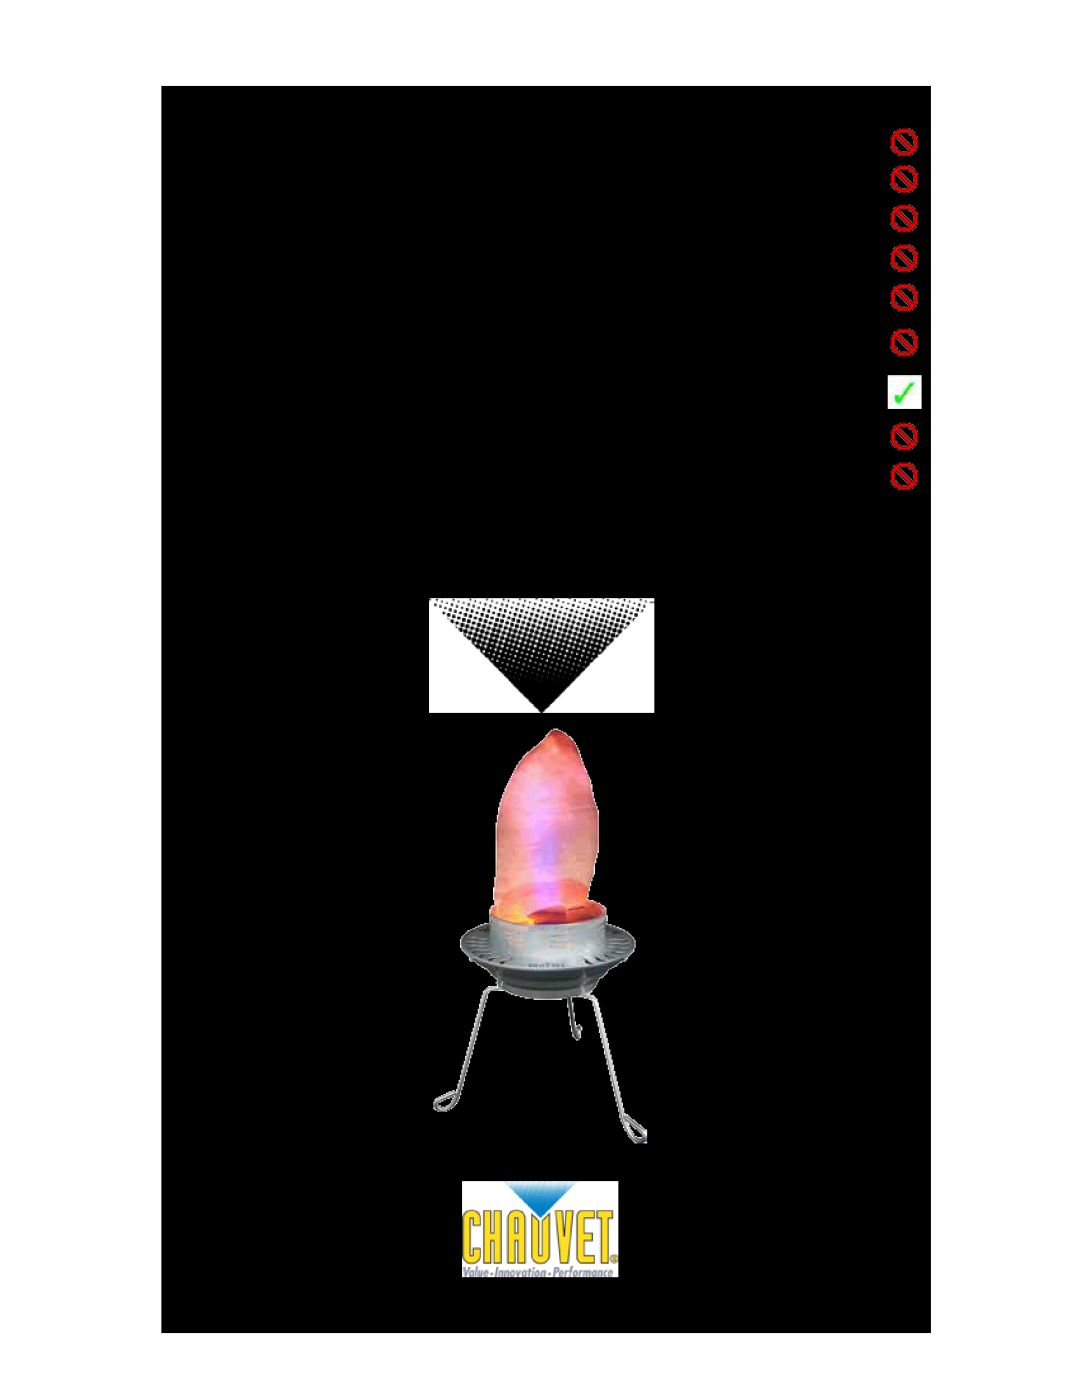 Chauvet user manual Snapshot, LED Mushroom, OK on Dimmer Outdoor OK Sound-Activated DMX512, User-Serviceable 